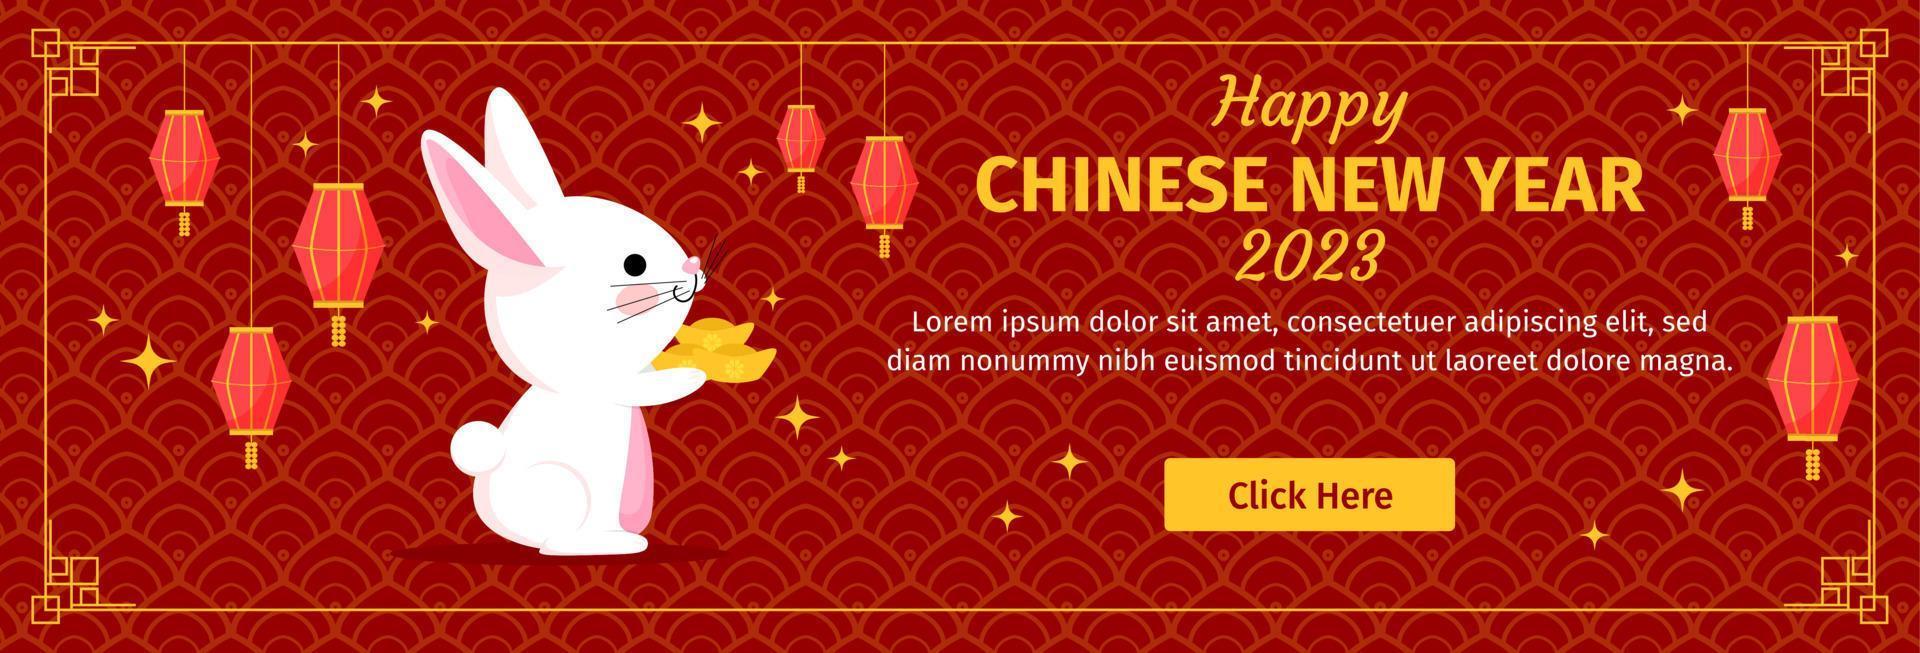 happy new year chinese 2023 rabbit vector horizontal banner flat design